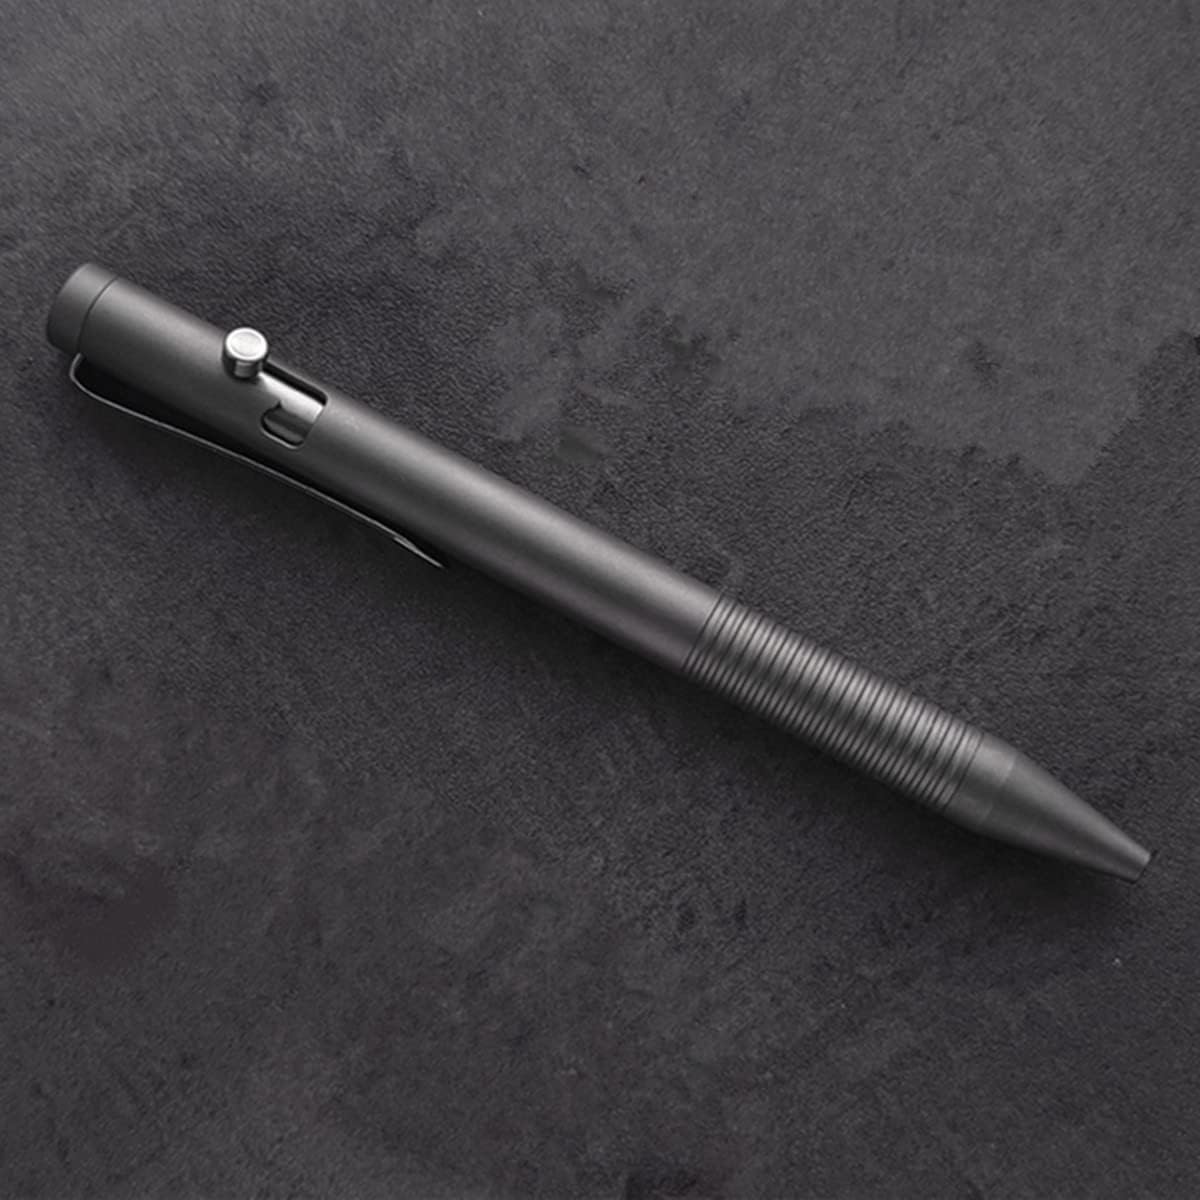 Titanium Alloy Bolt Action Pen Clip EDC Pocket Tactical Ballpoint Pen